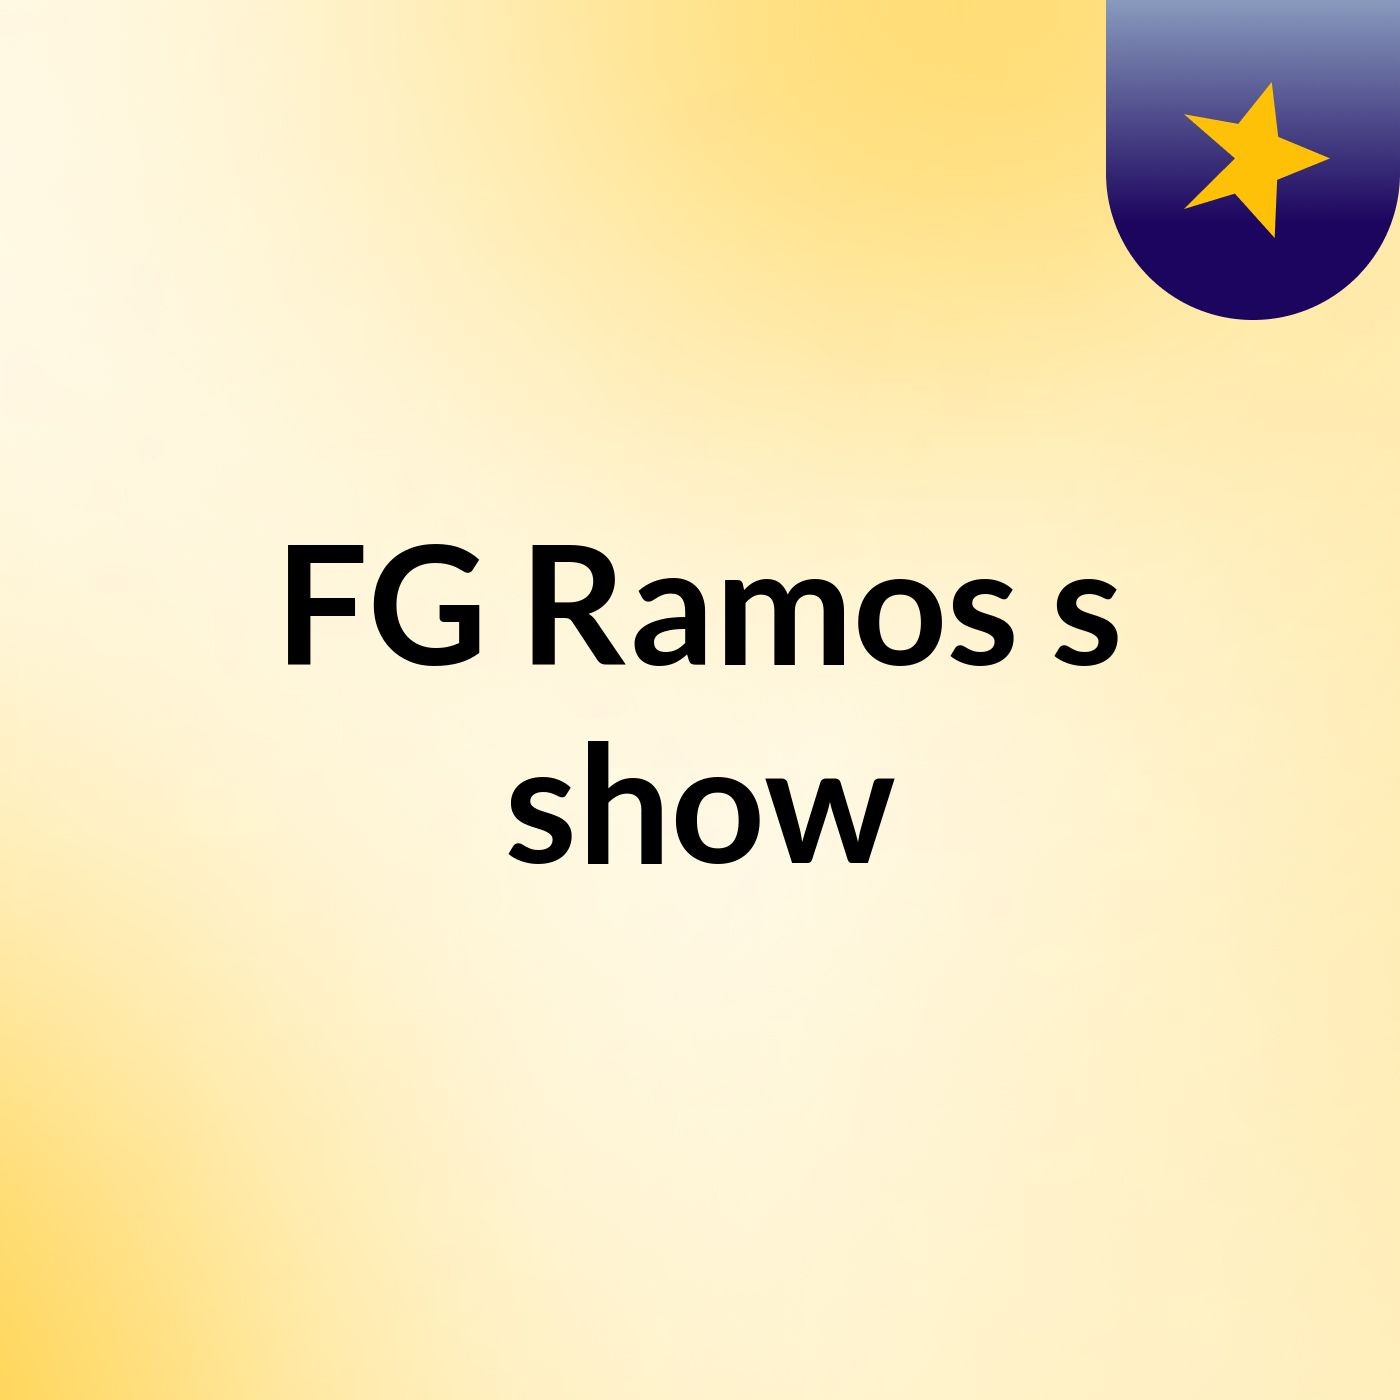 FG Ramos's show